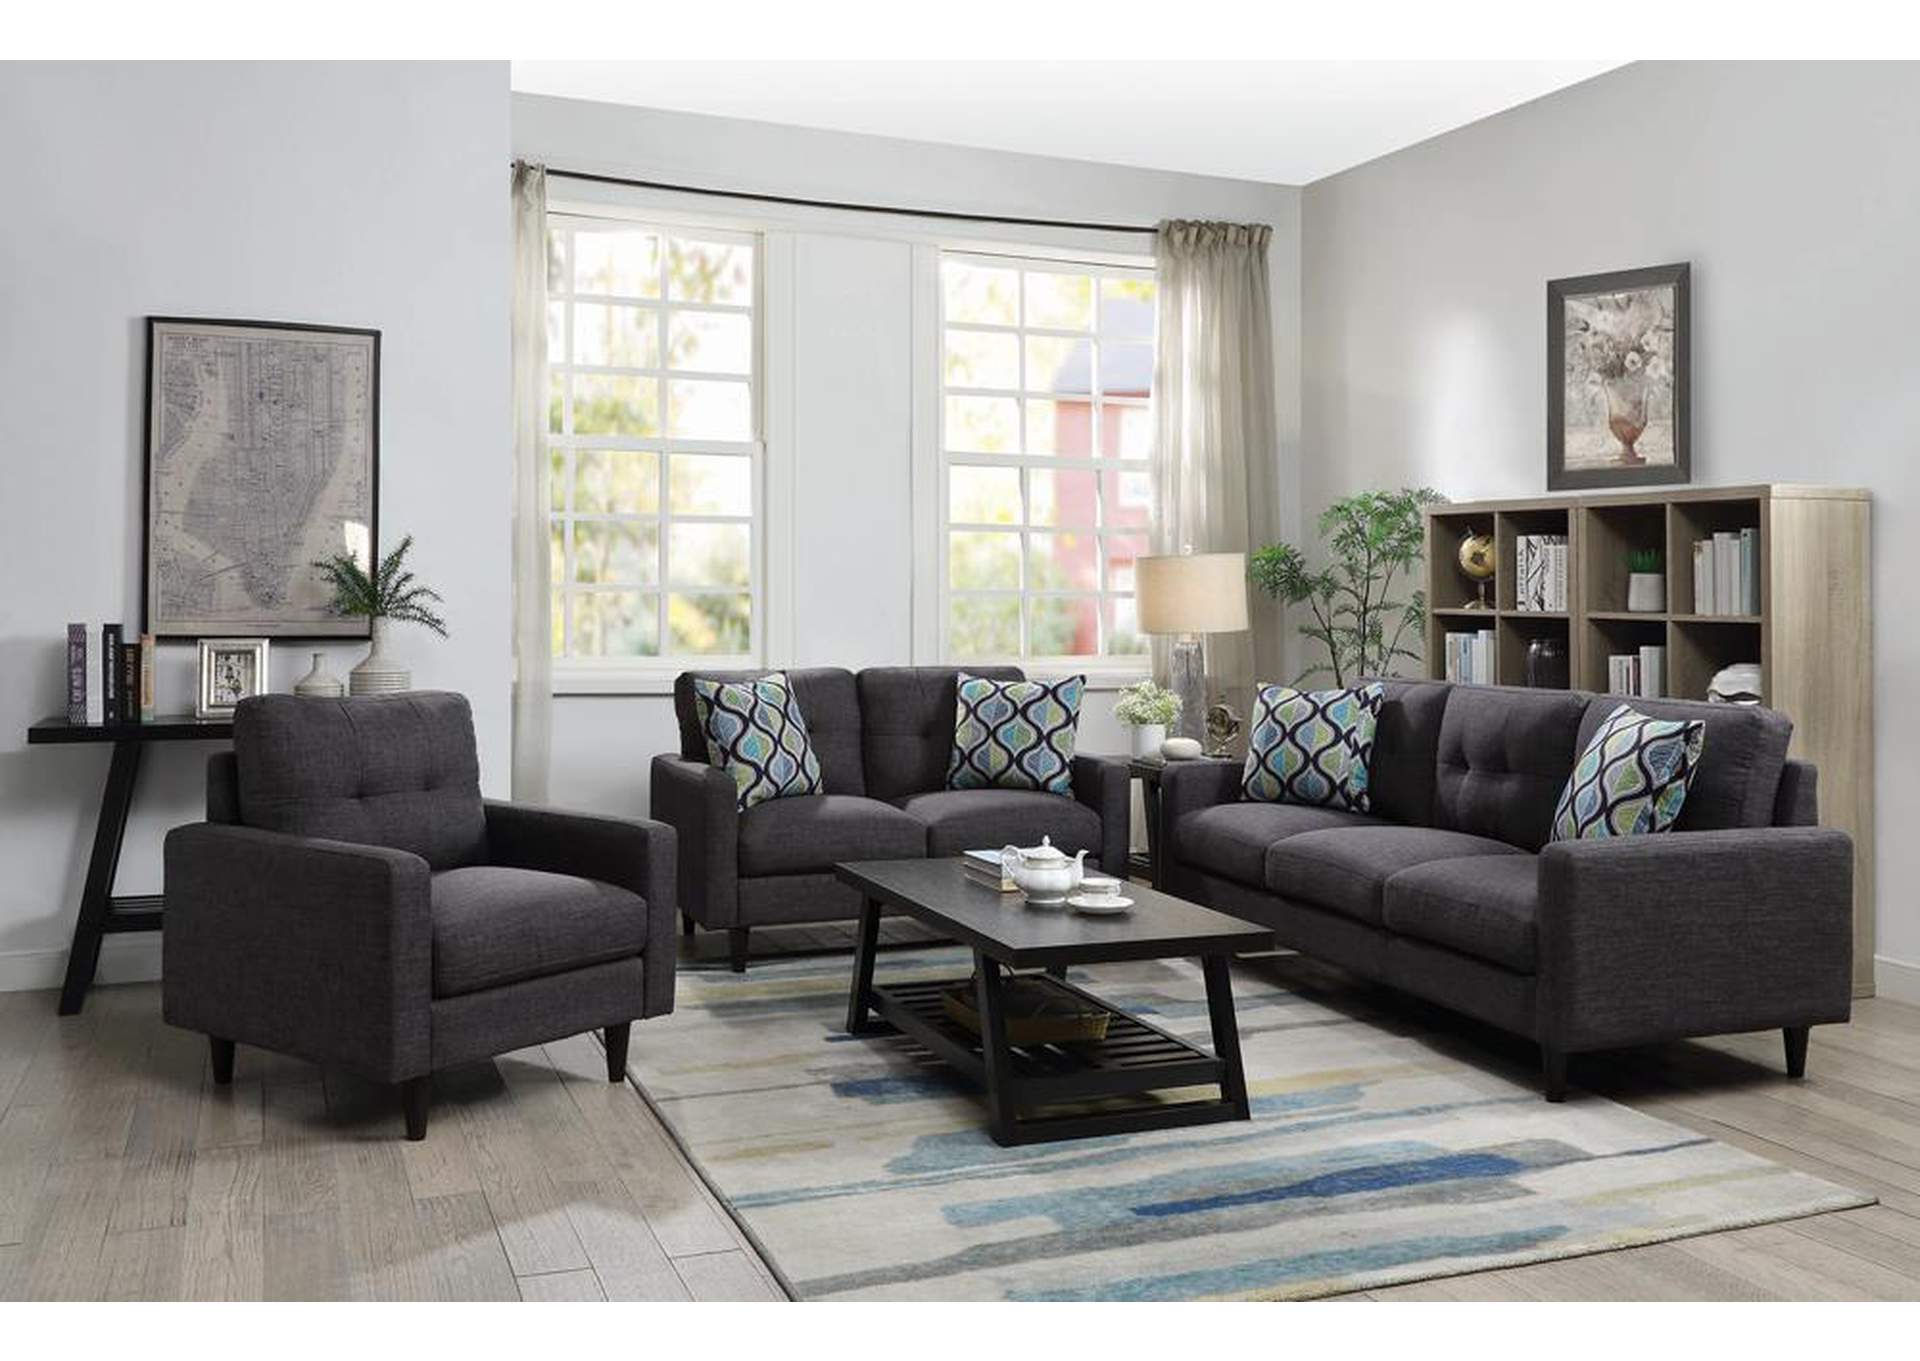 St-206 Grey Sofa,Coaster Furniture